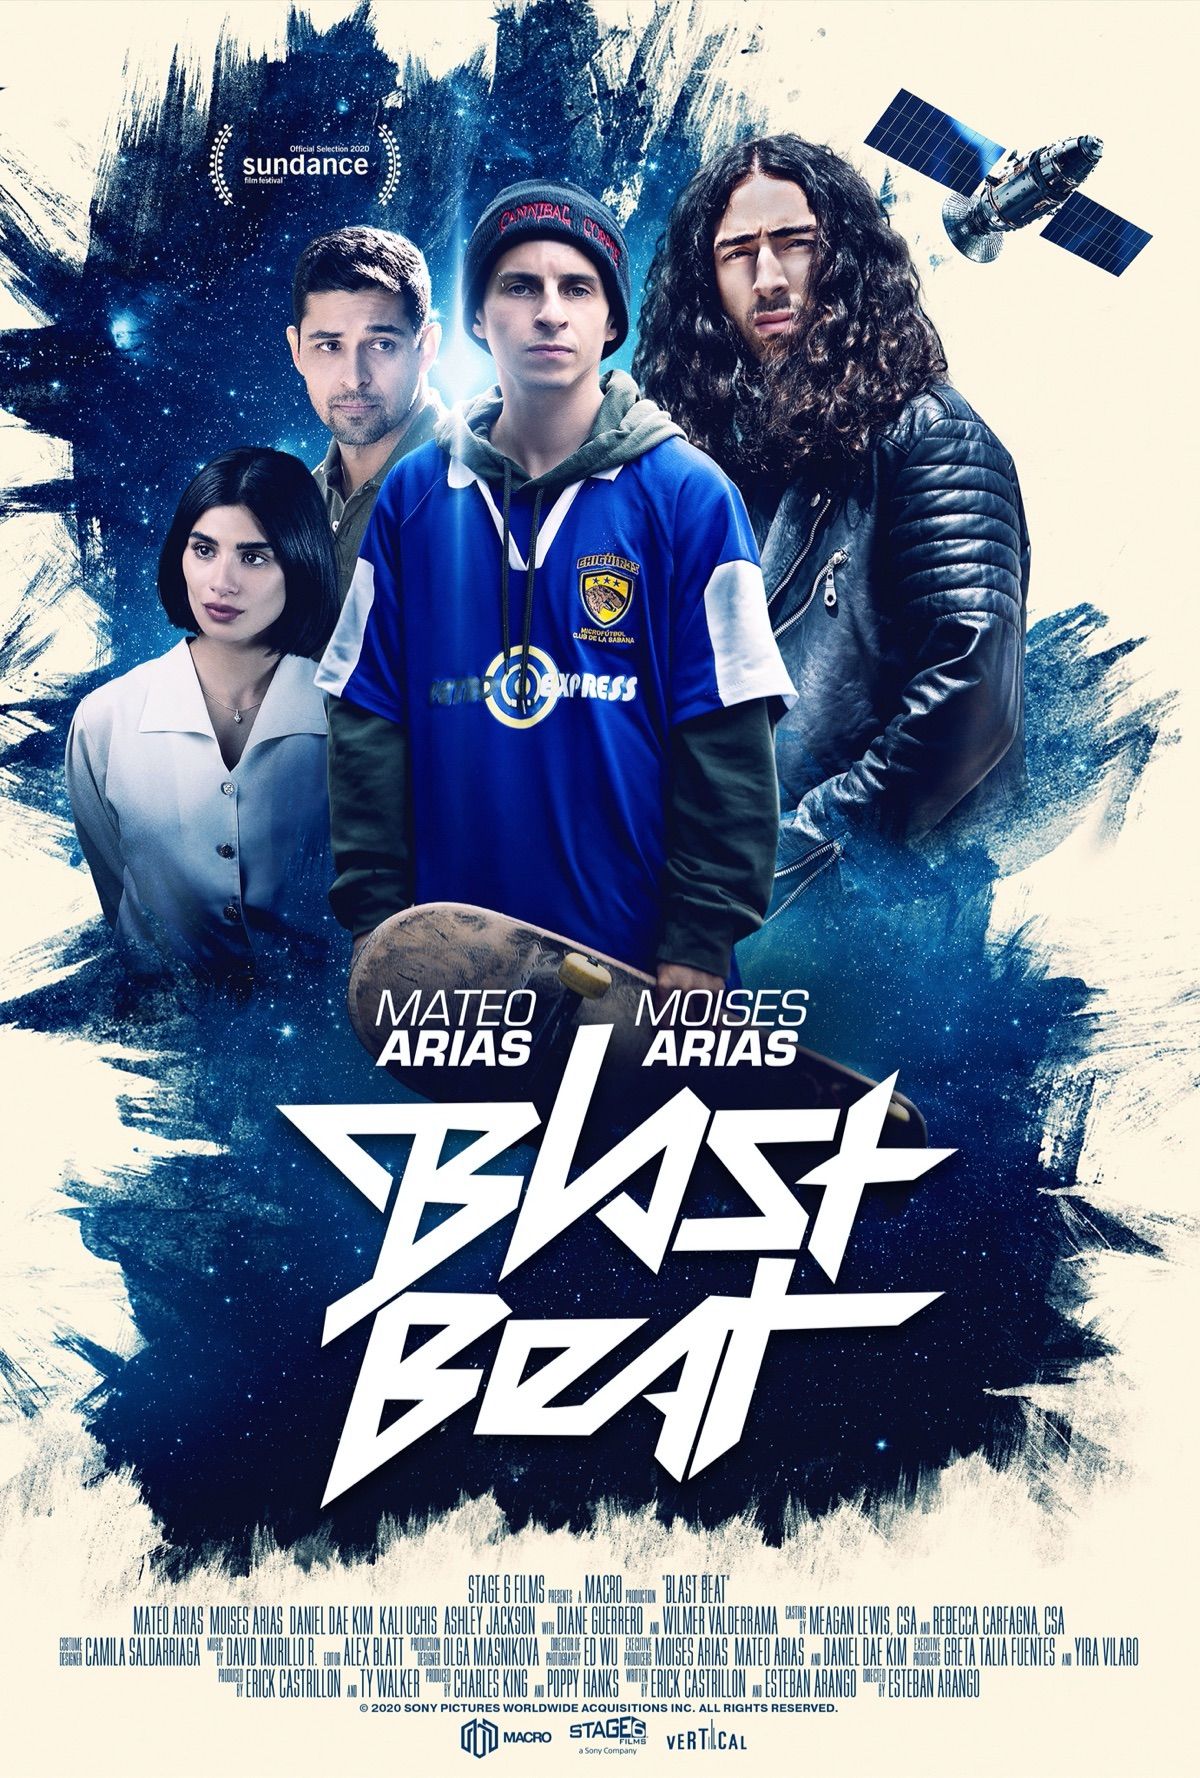 blast-beat-poster